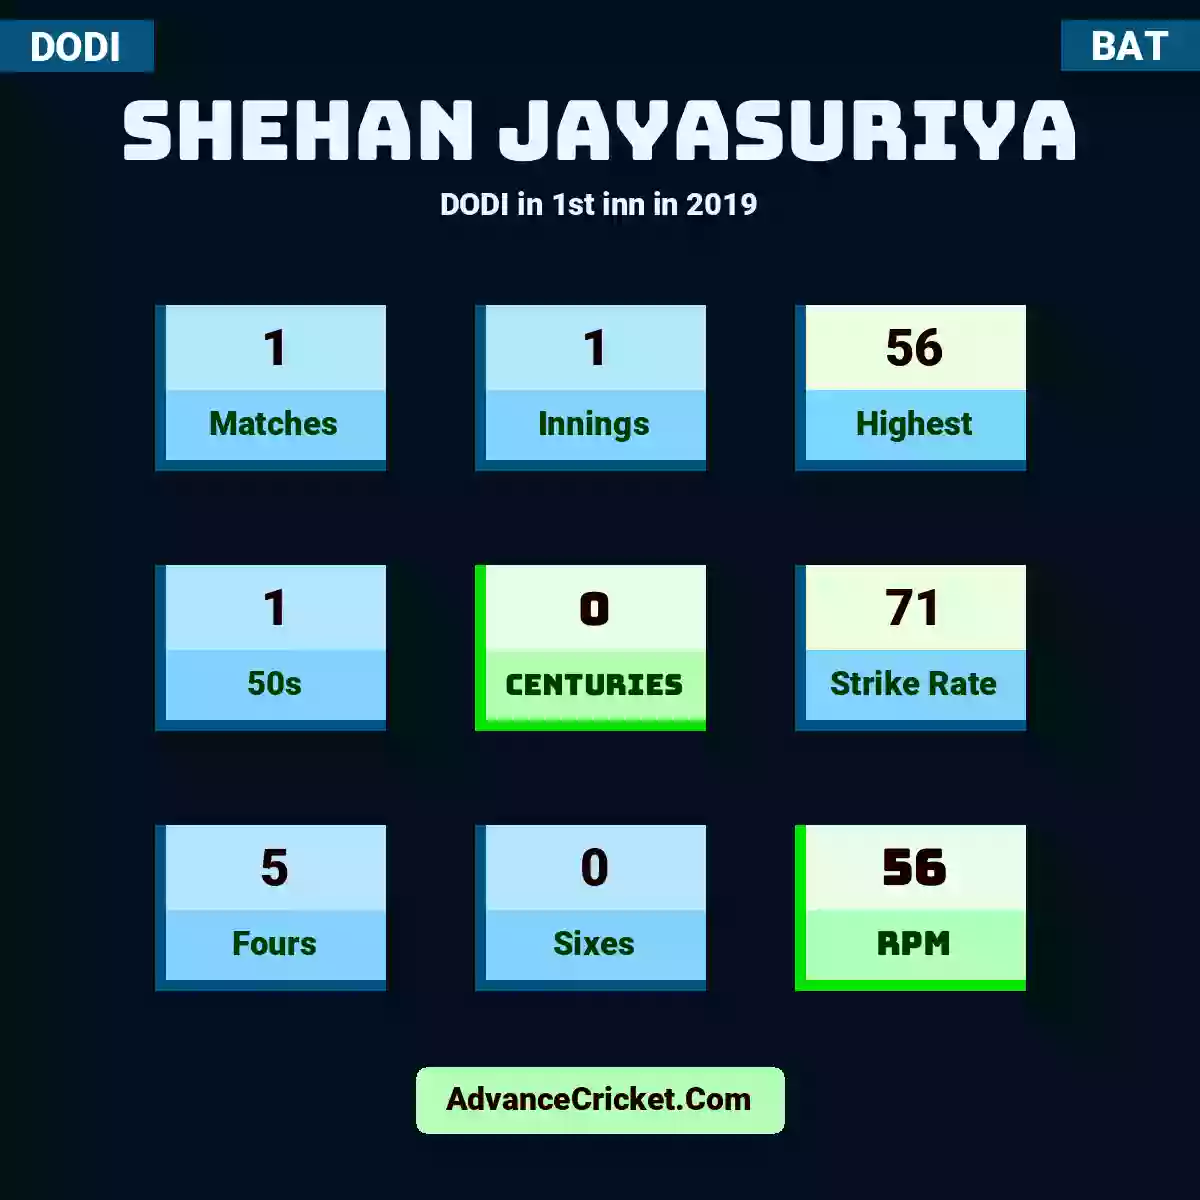 Shehan Jayasuriya DODI  in 1st inn in 2019, Shehan Jayasuriya played 1 matches, scored 56 runs as highest, 1 half-centuries, and 0 centuries, with a strike rate of 71. S.Jayasuriya hit 5 fours and 0 sixes, with an RPM of 56.